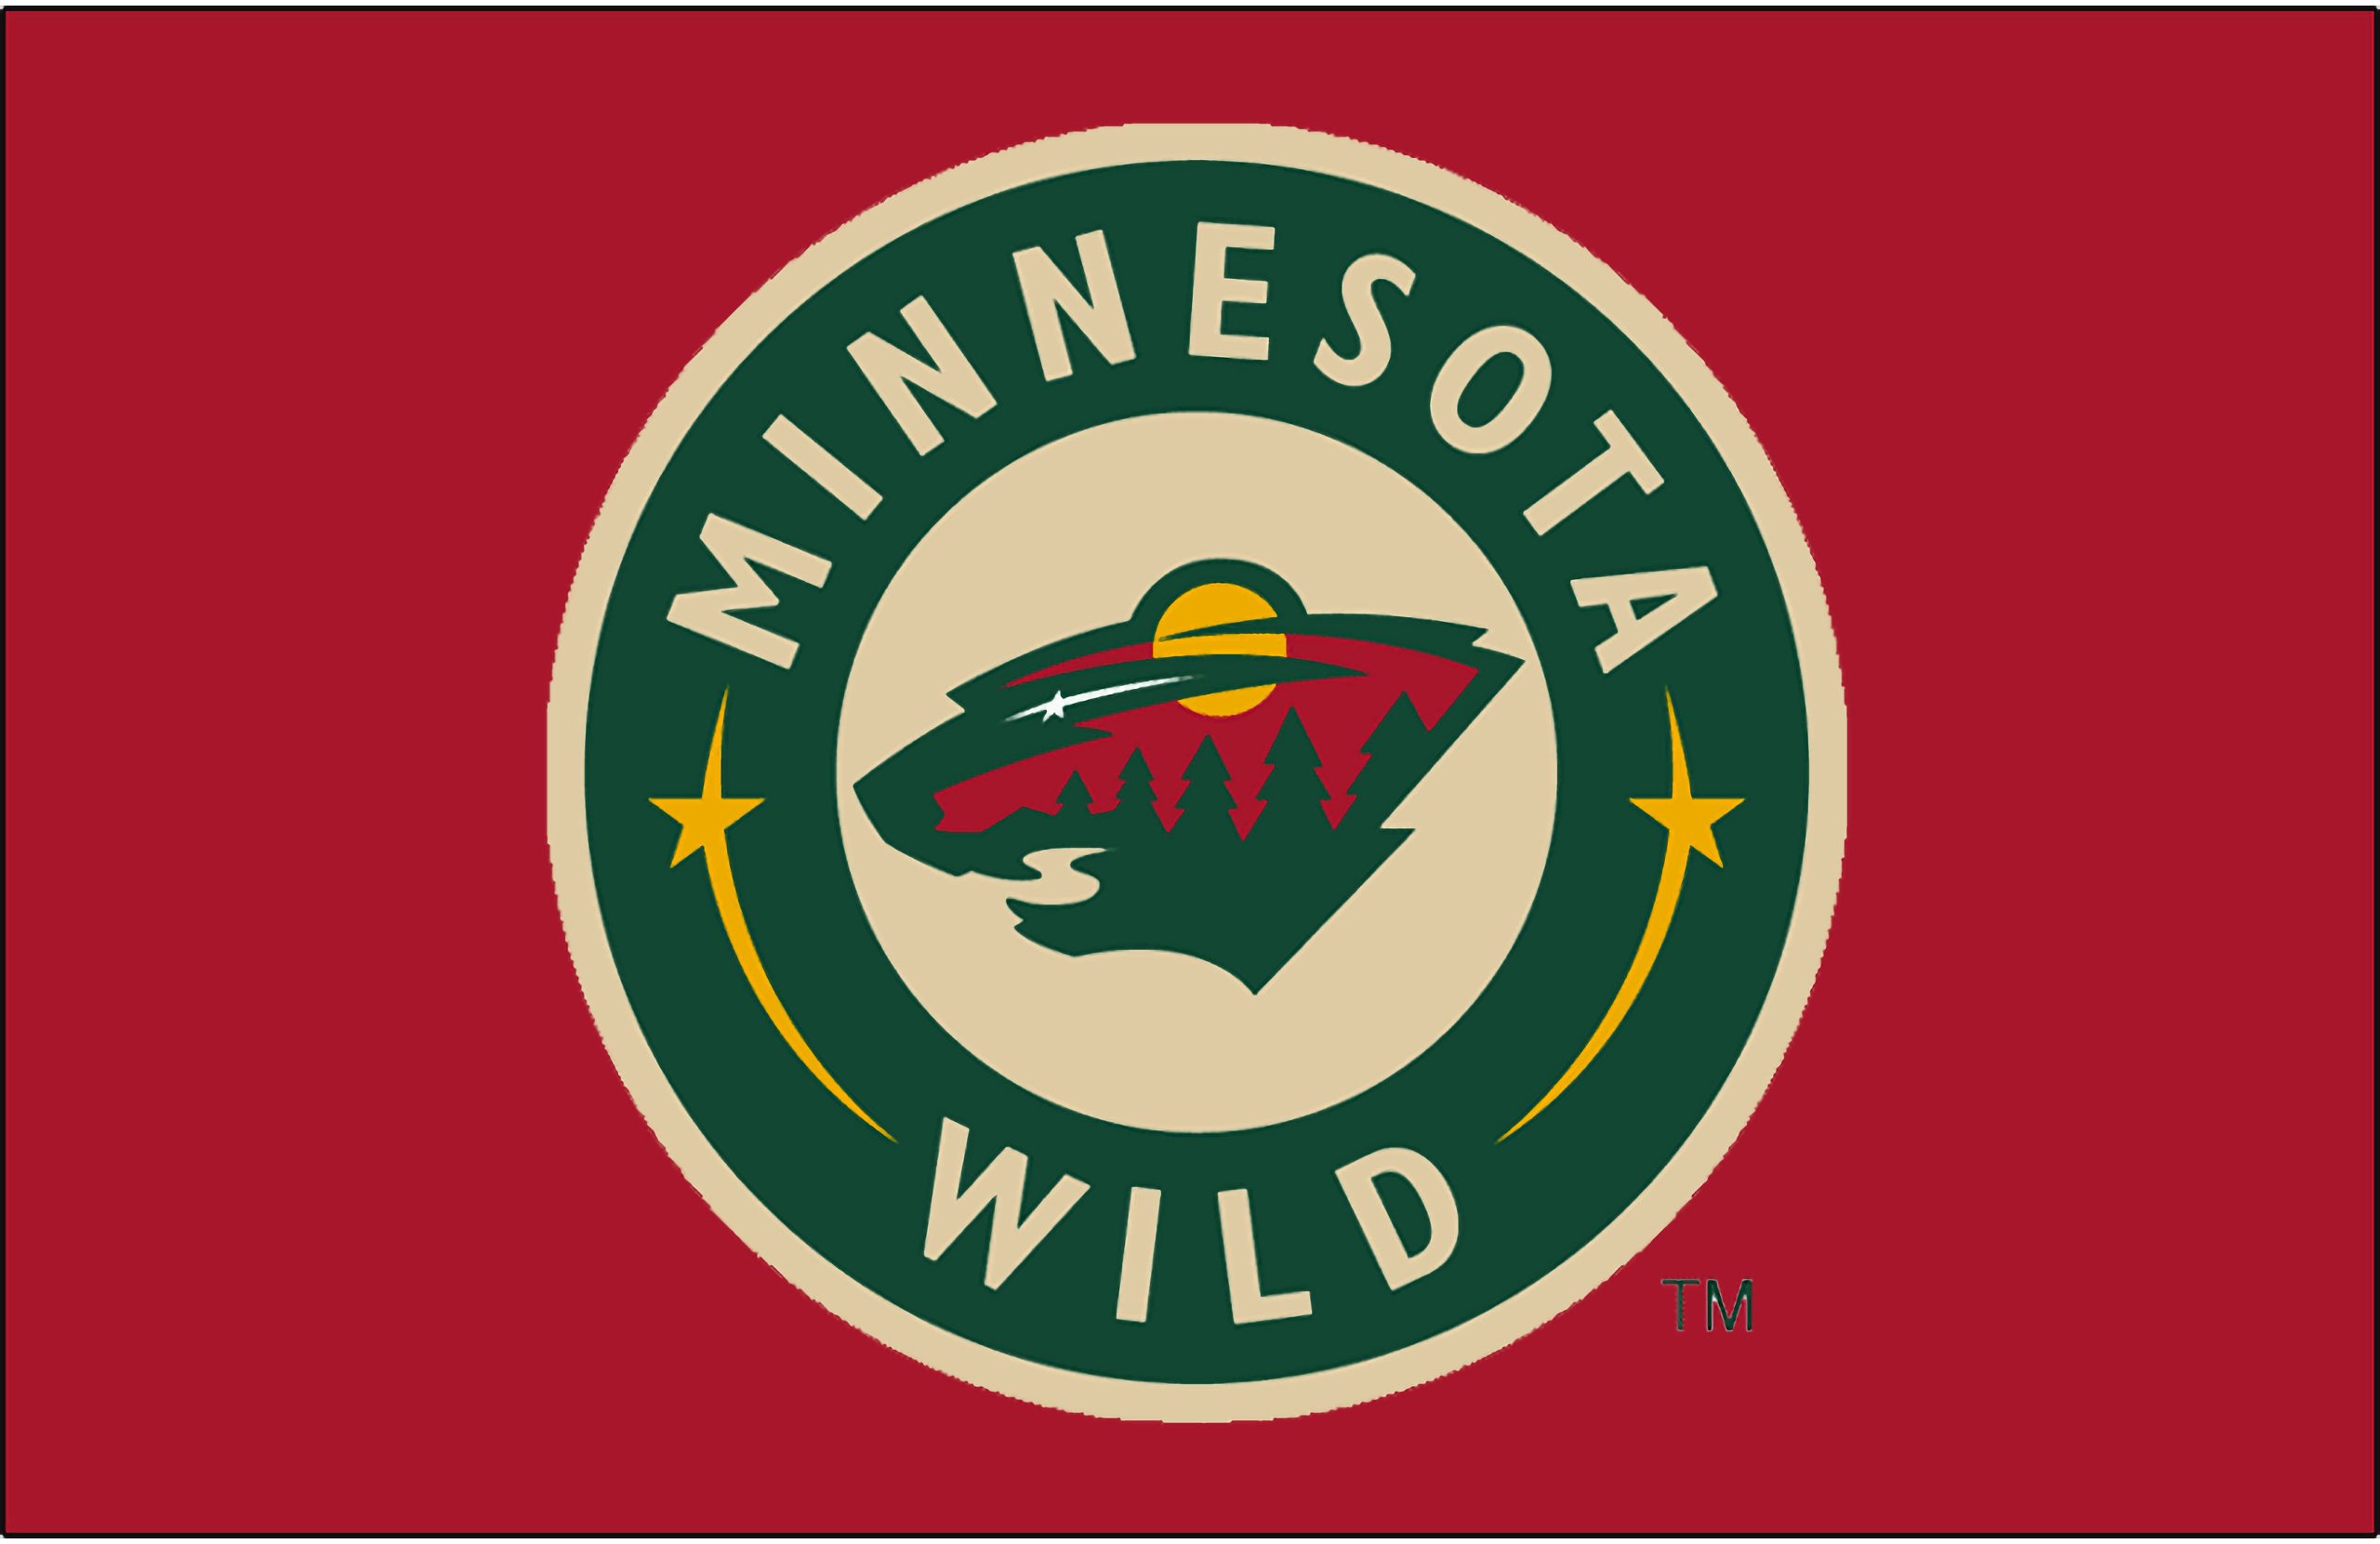 Minnesota Wild - New month, new wallpaper. 🖥 Download